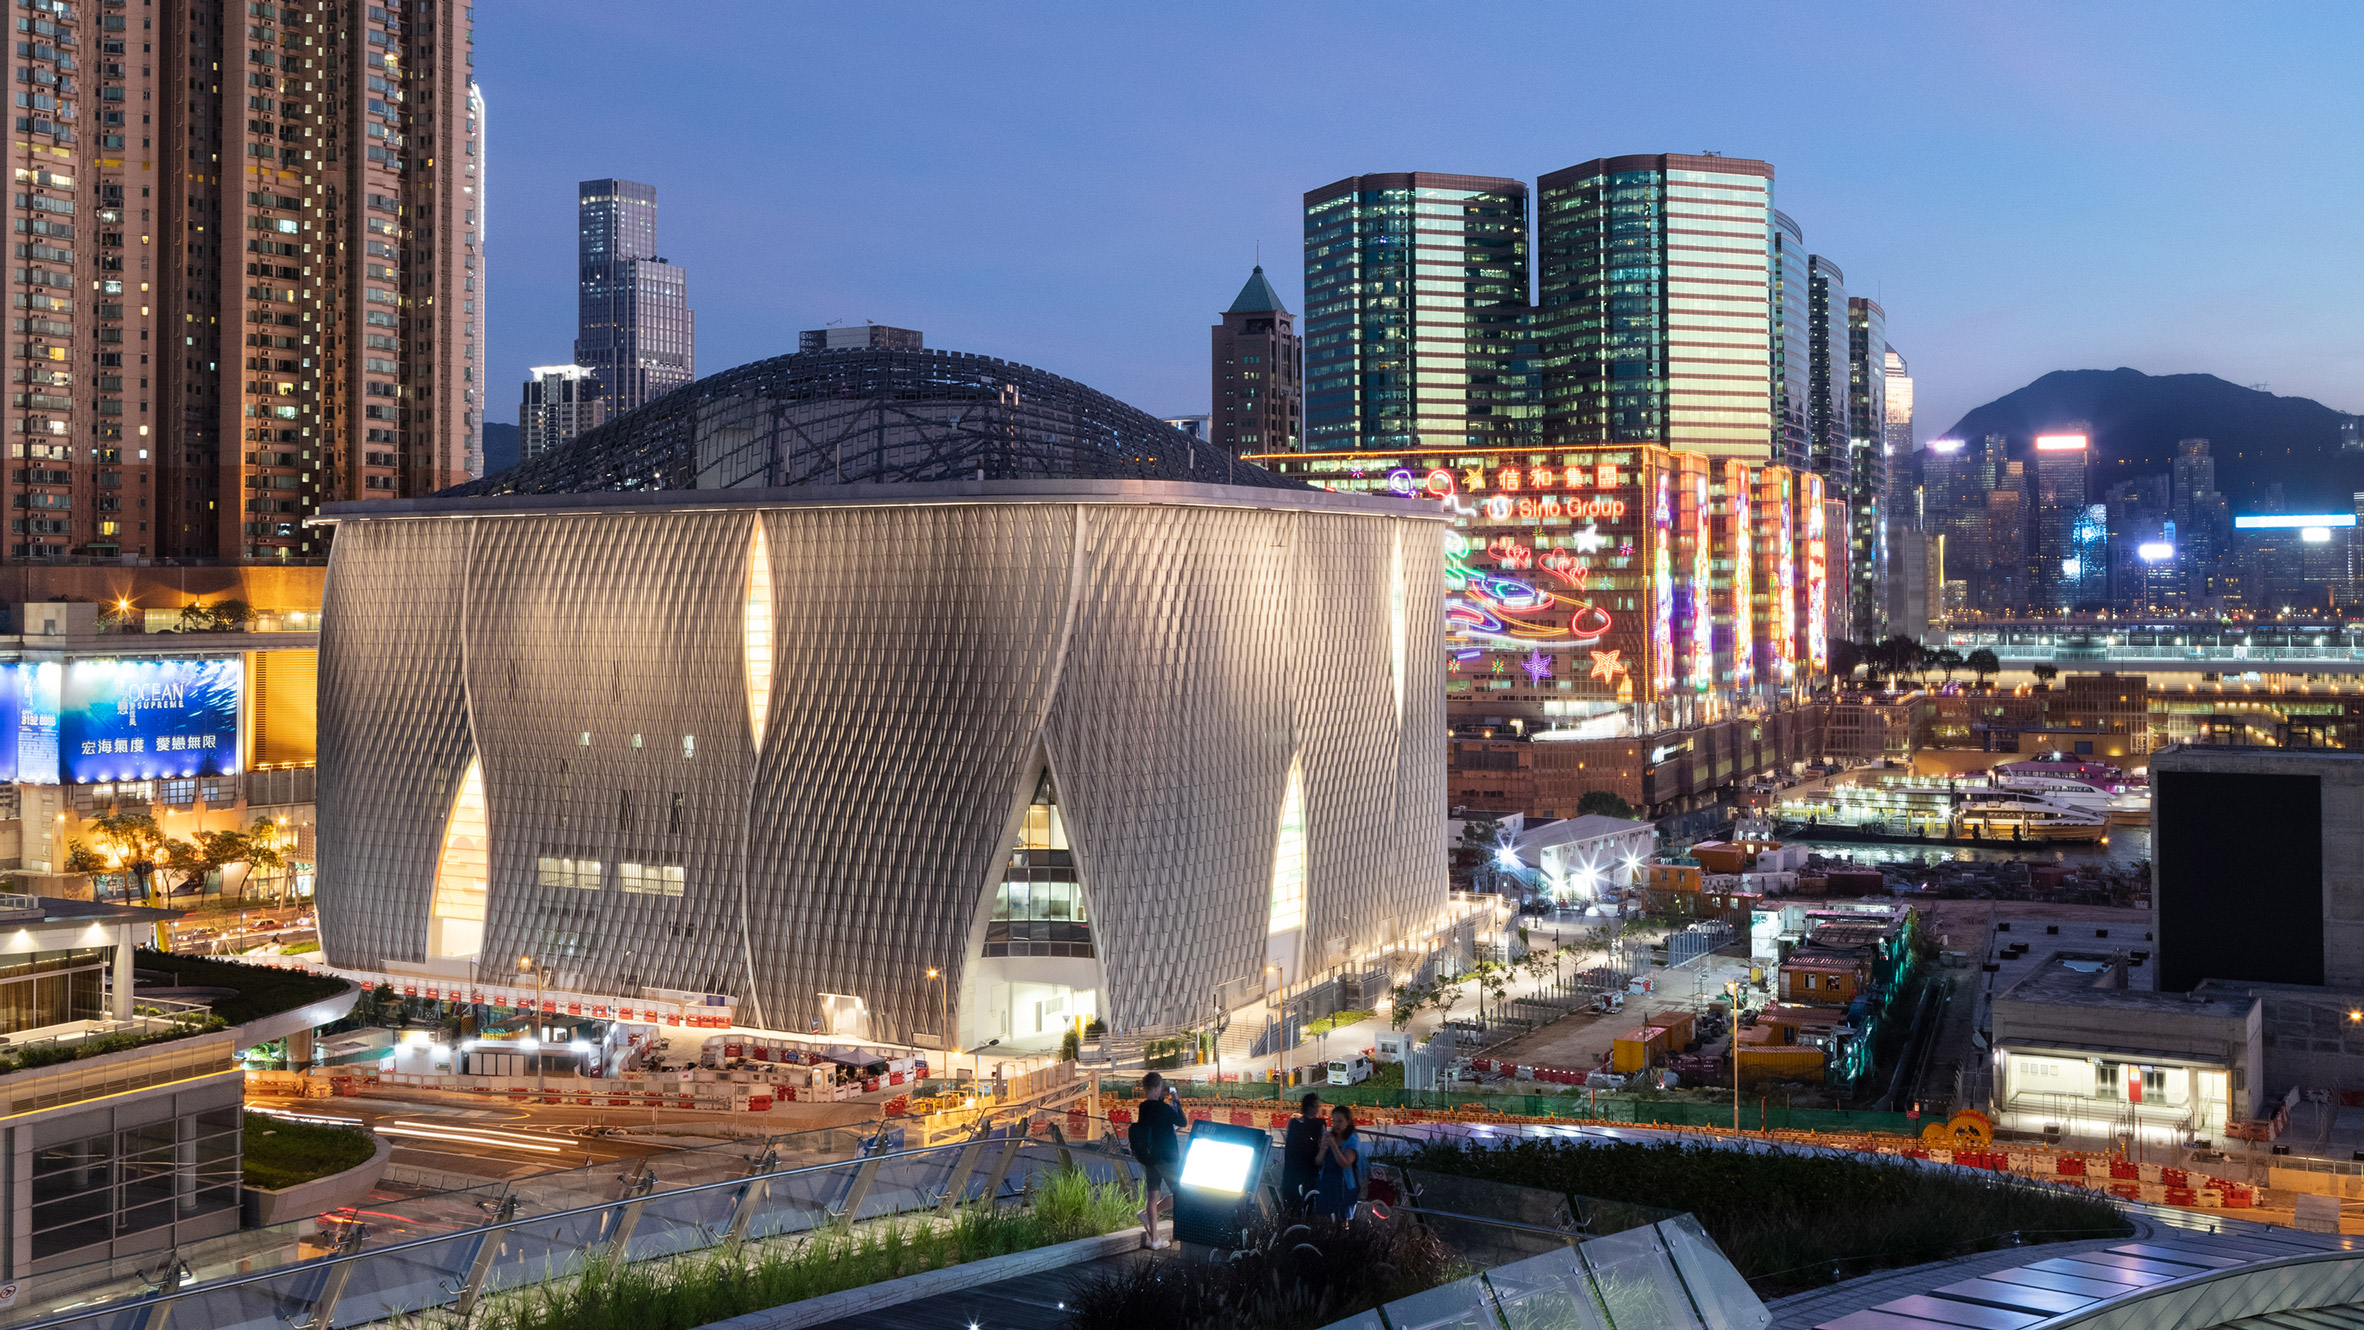 Curled aluminium ribs envelop Xiqu Centre opera house in Hong Kong